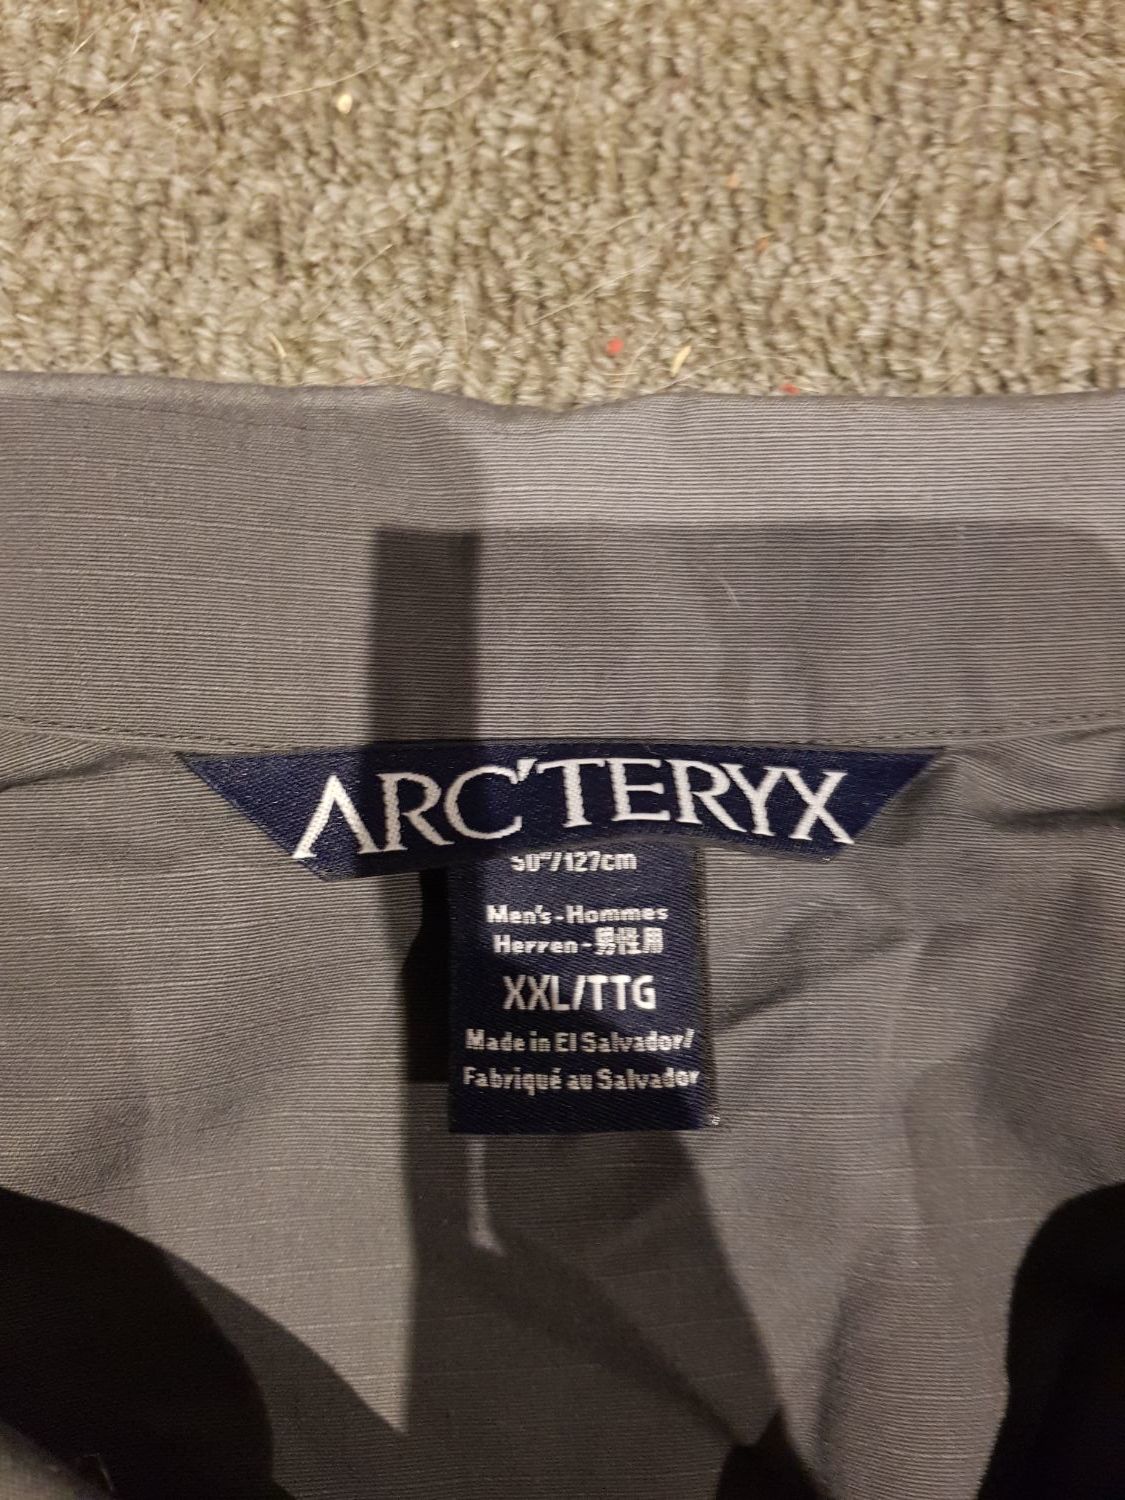 Arcteryx wolf grey - Gear - Airsoft Forums UK